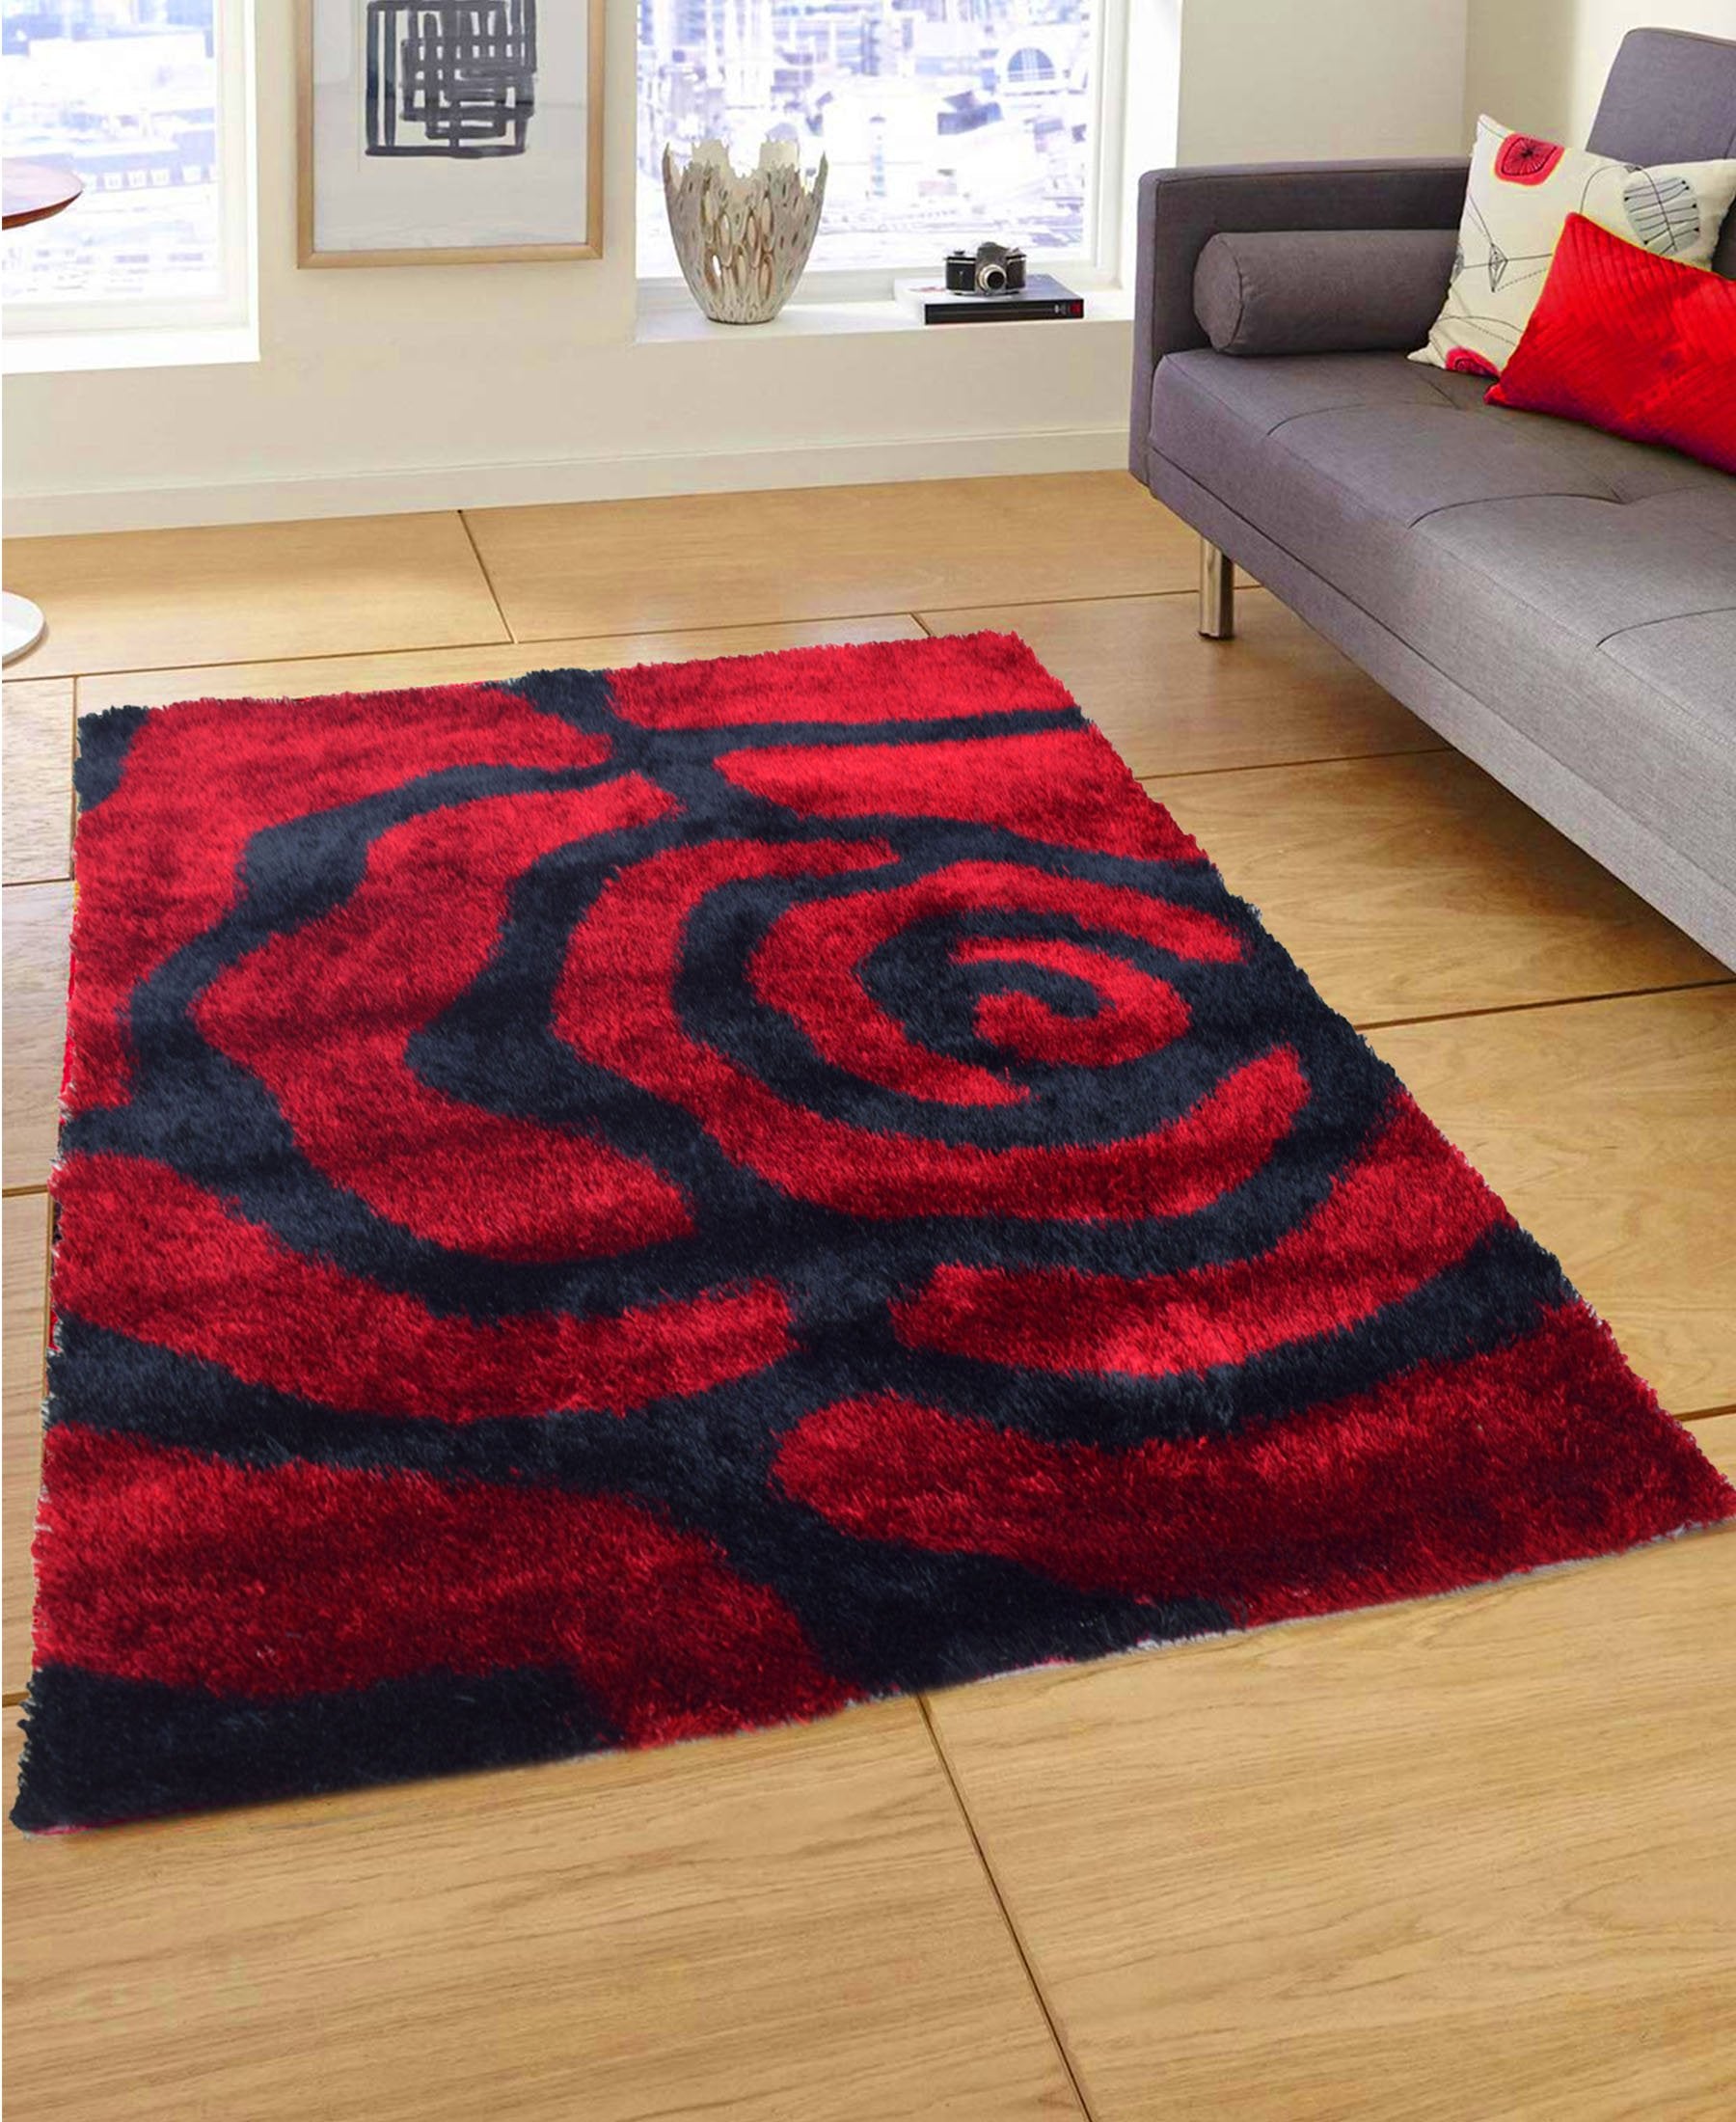 Shaggy Rose Carpet 800mm x 1500mm - Red